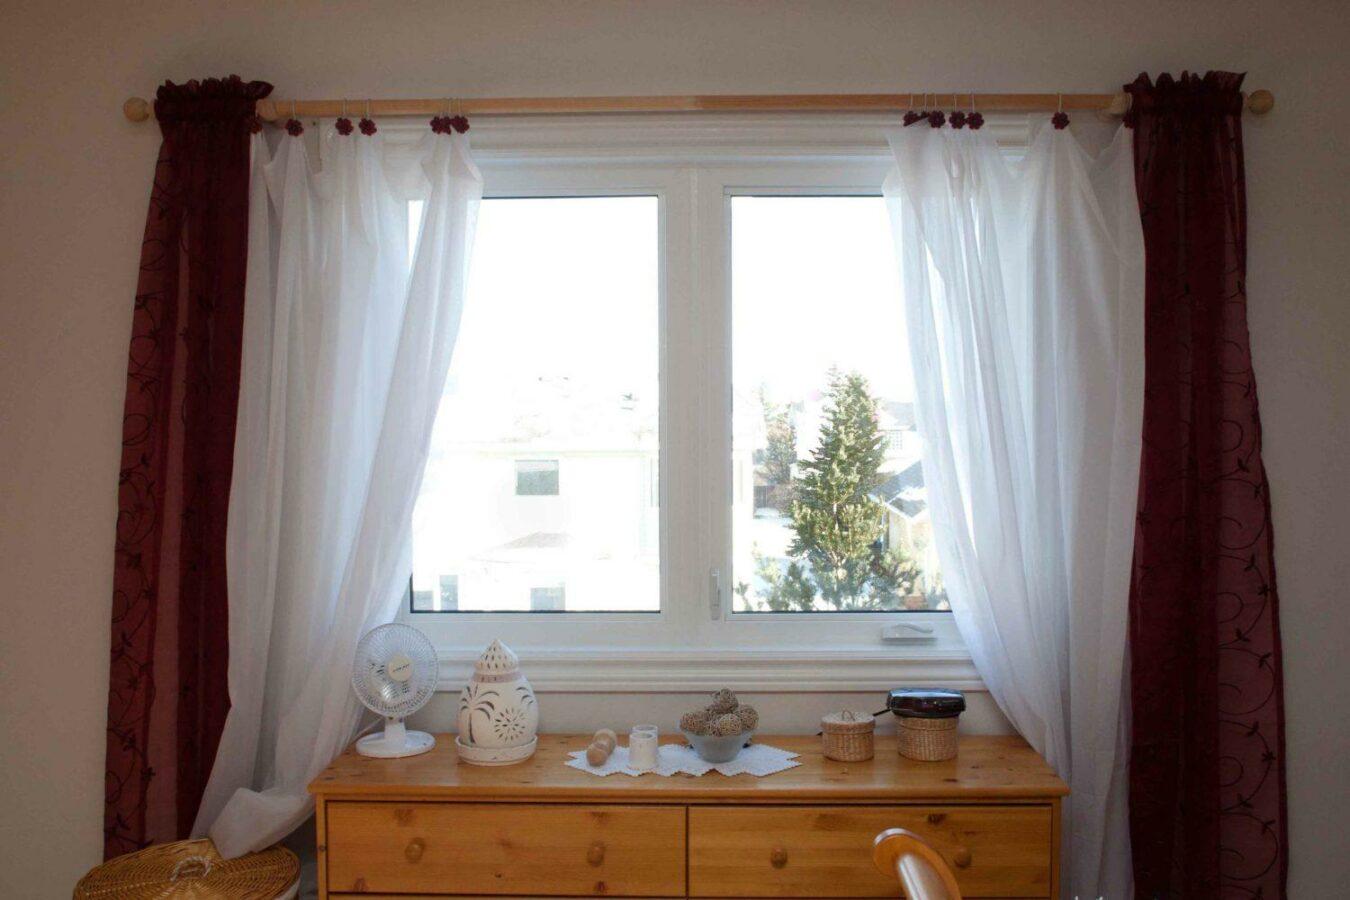 master bedroom windows